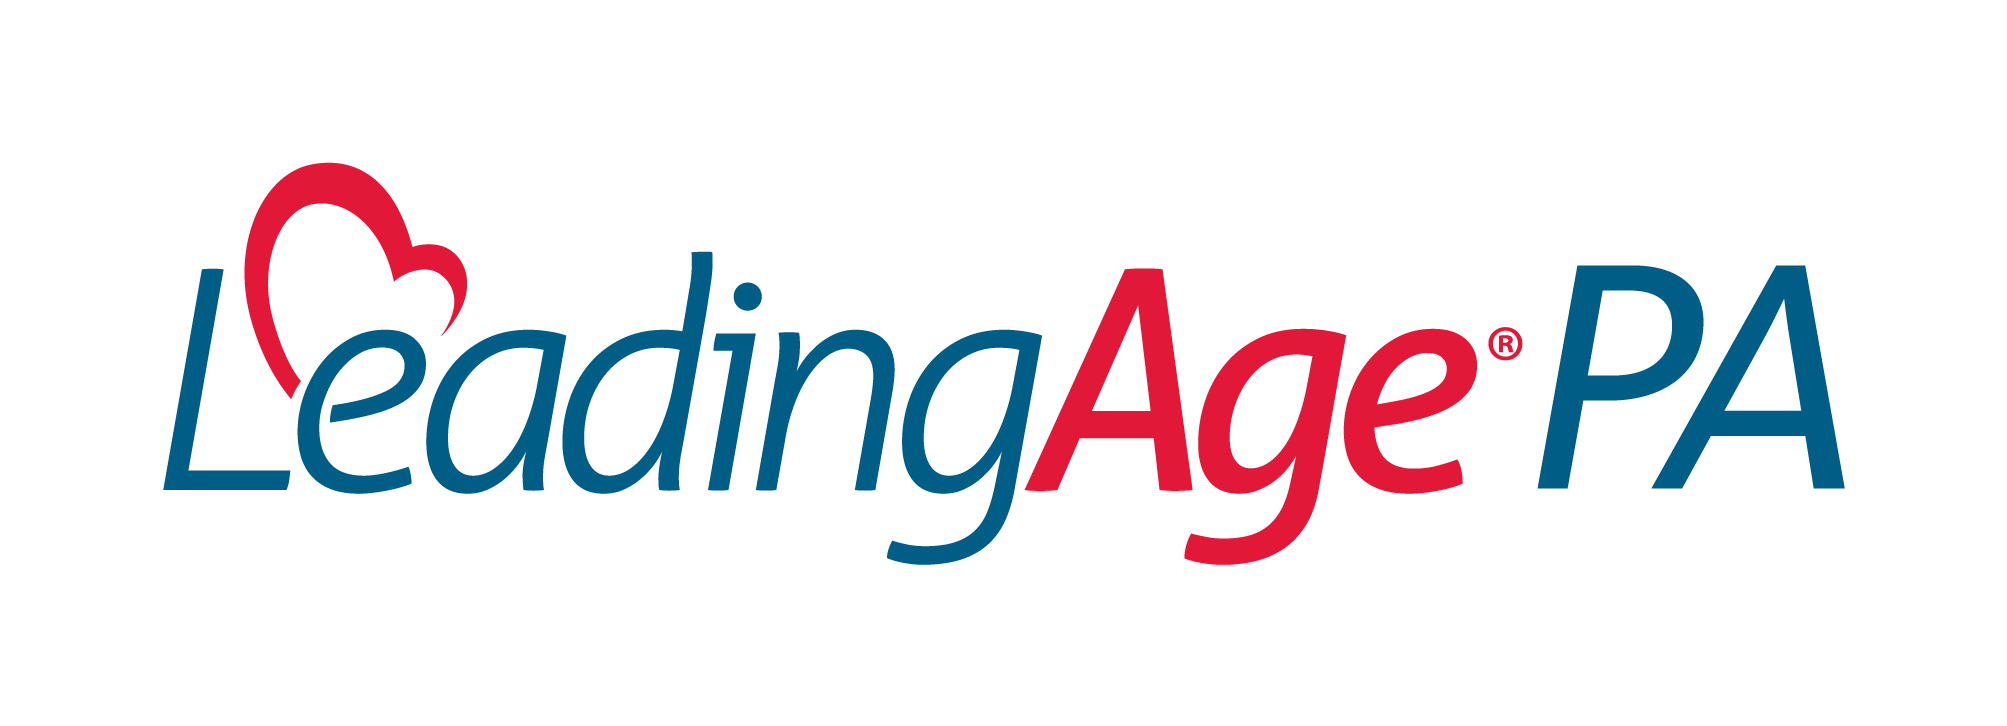 Leading Age PA